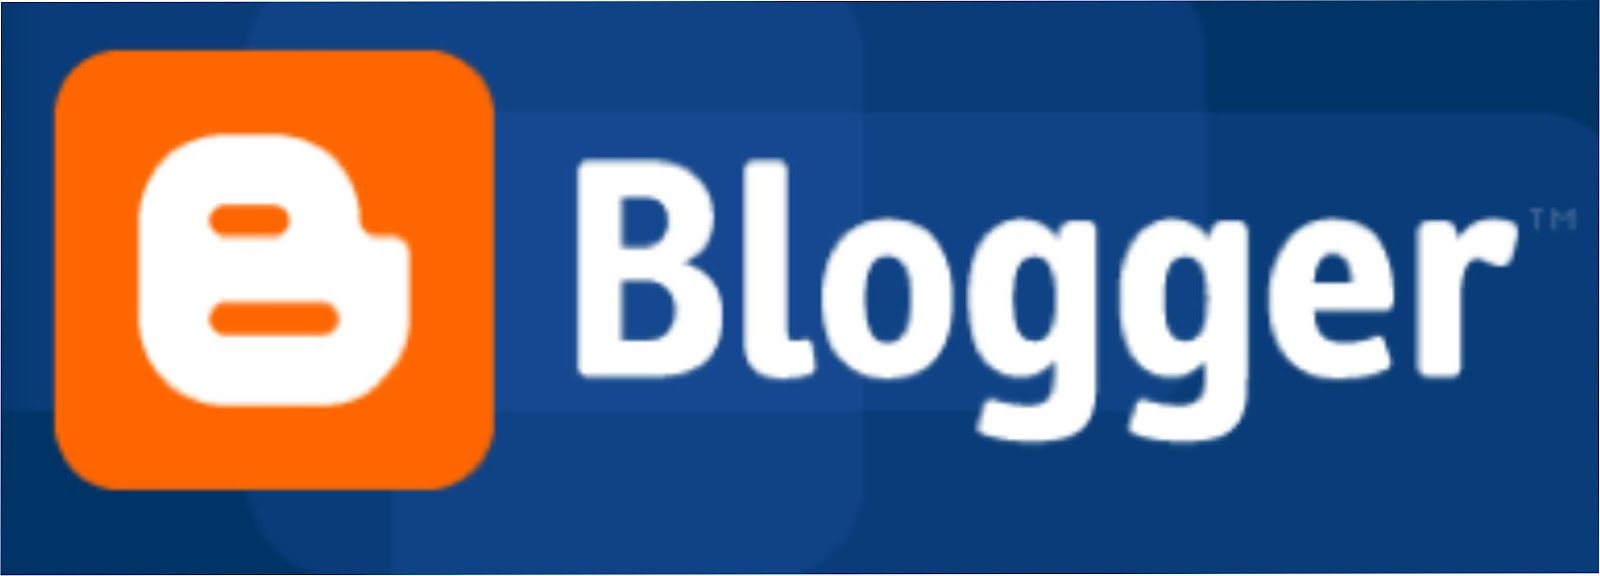 Blogger Logo.jpg